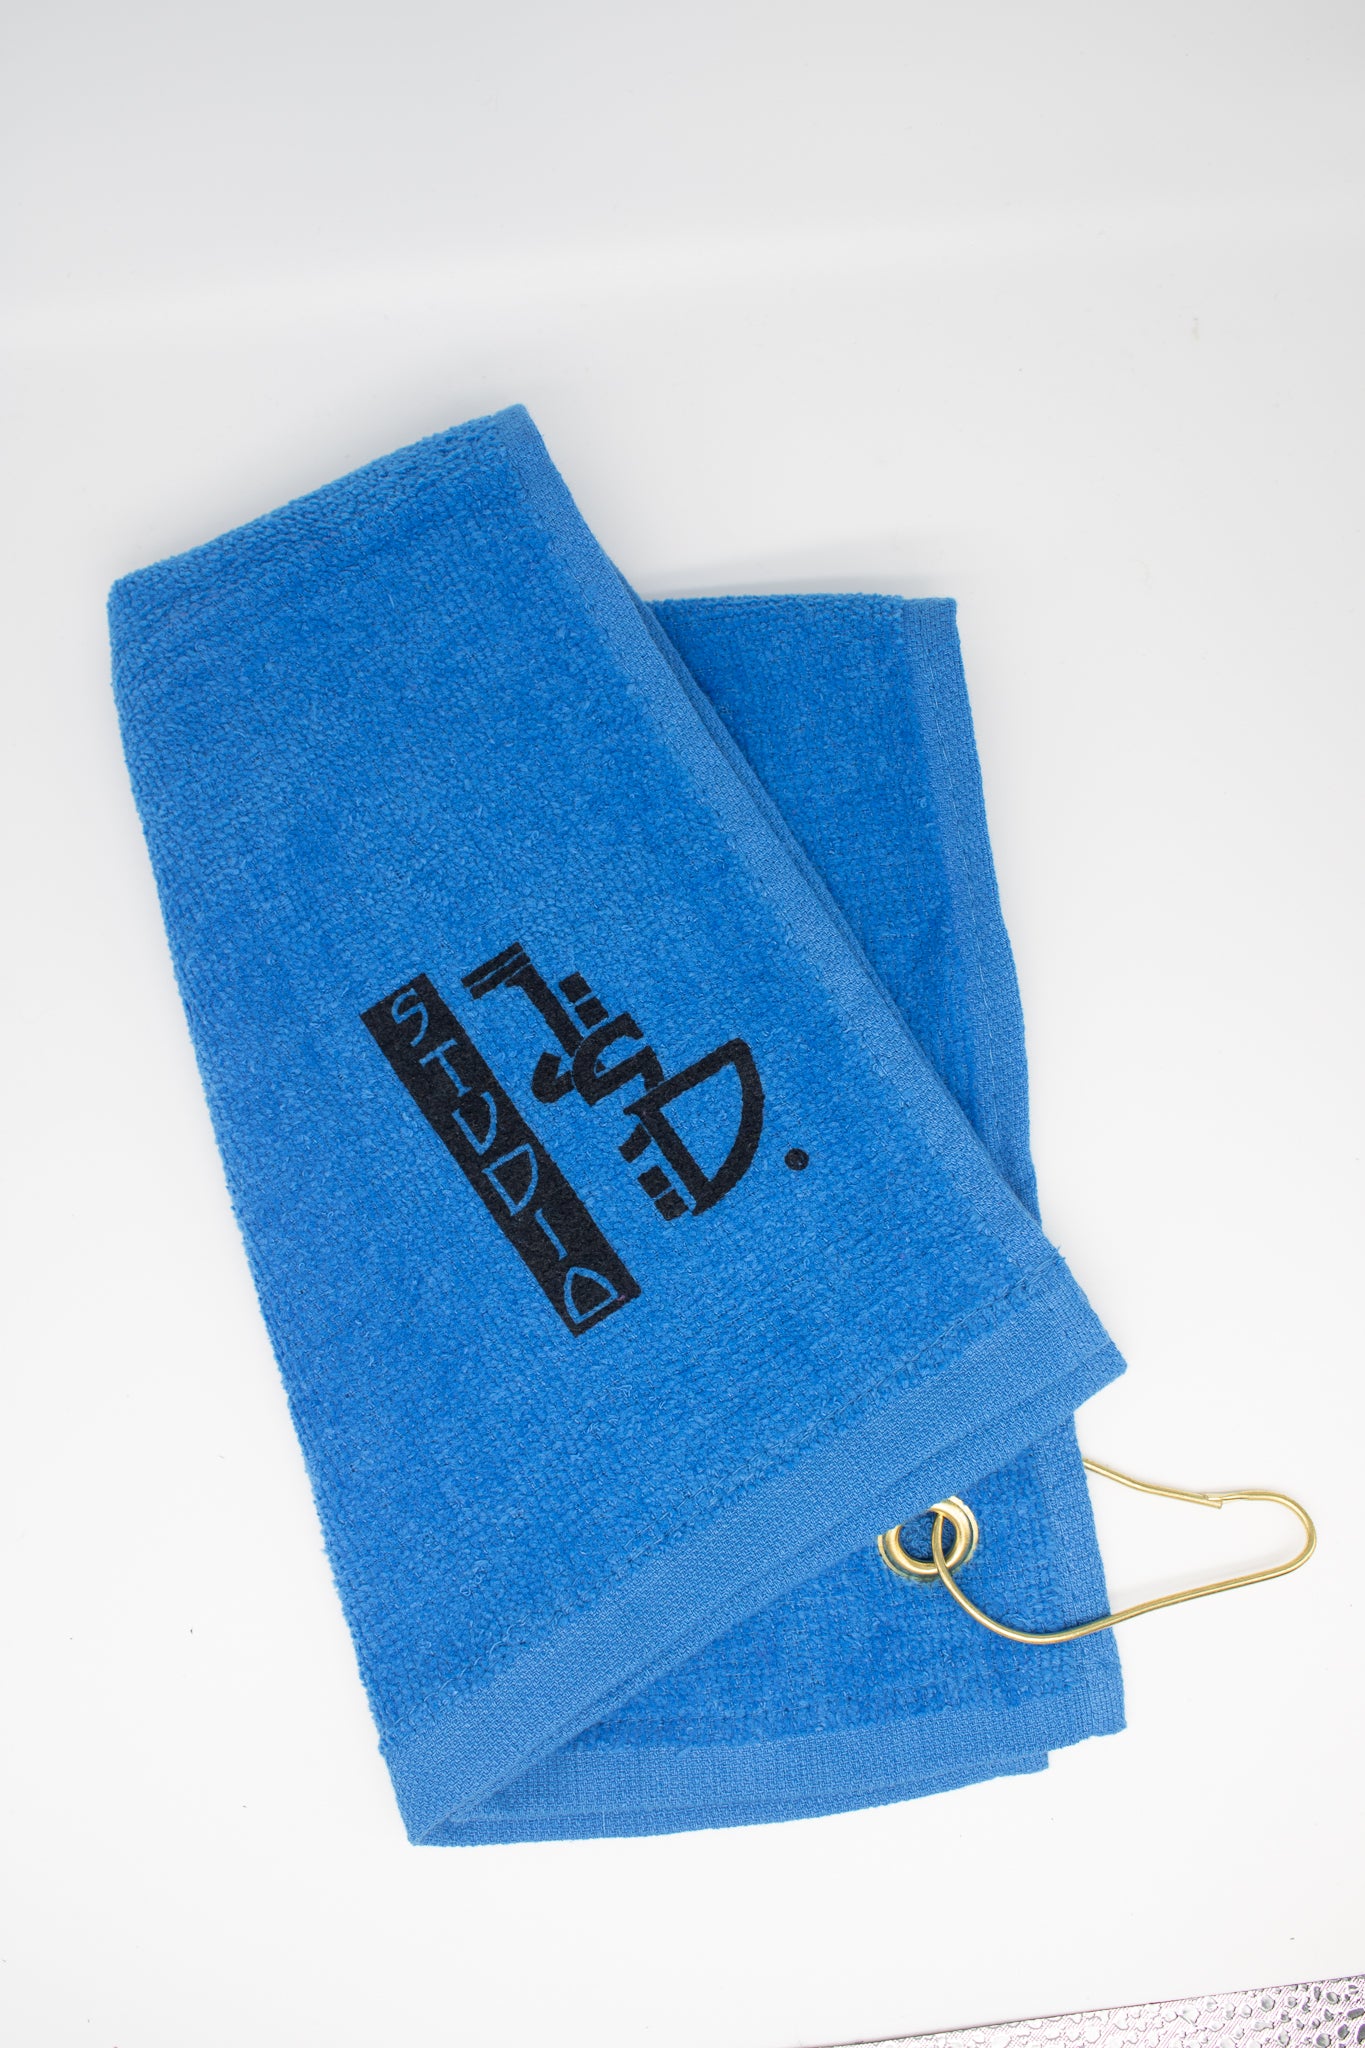 Hand Towel With Hanger